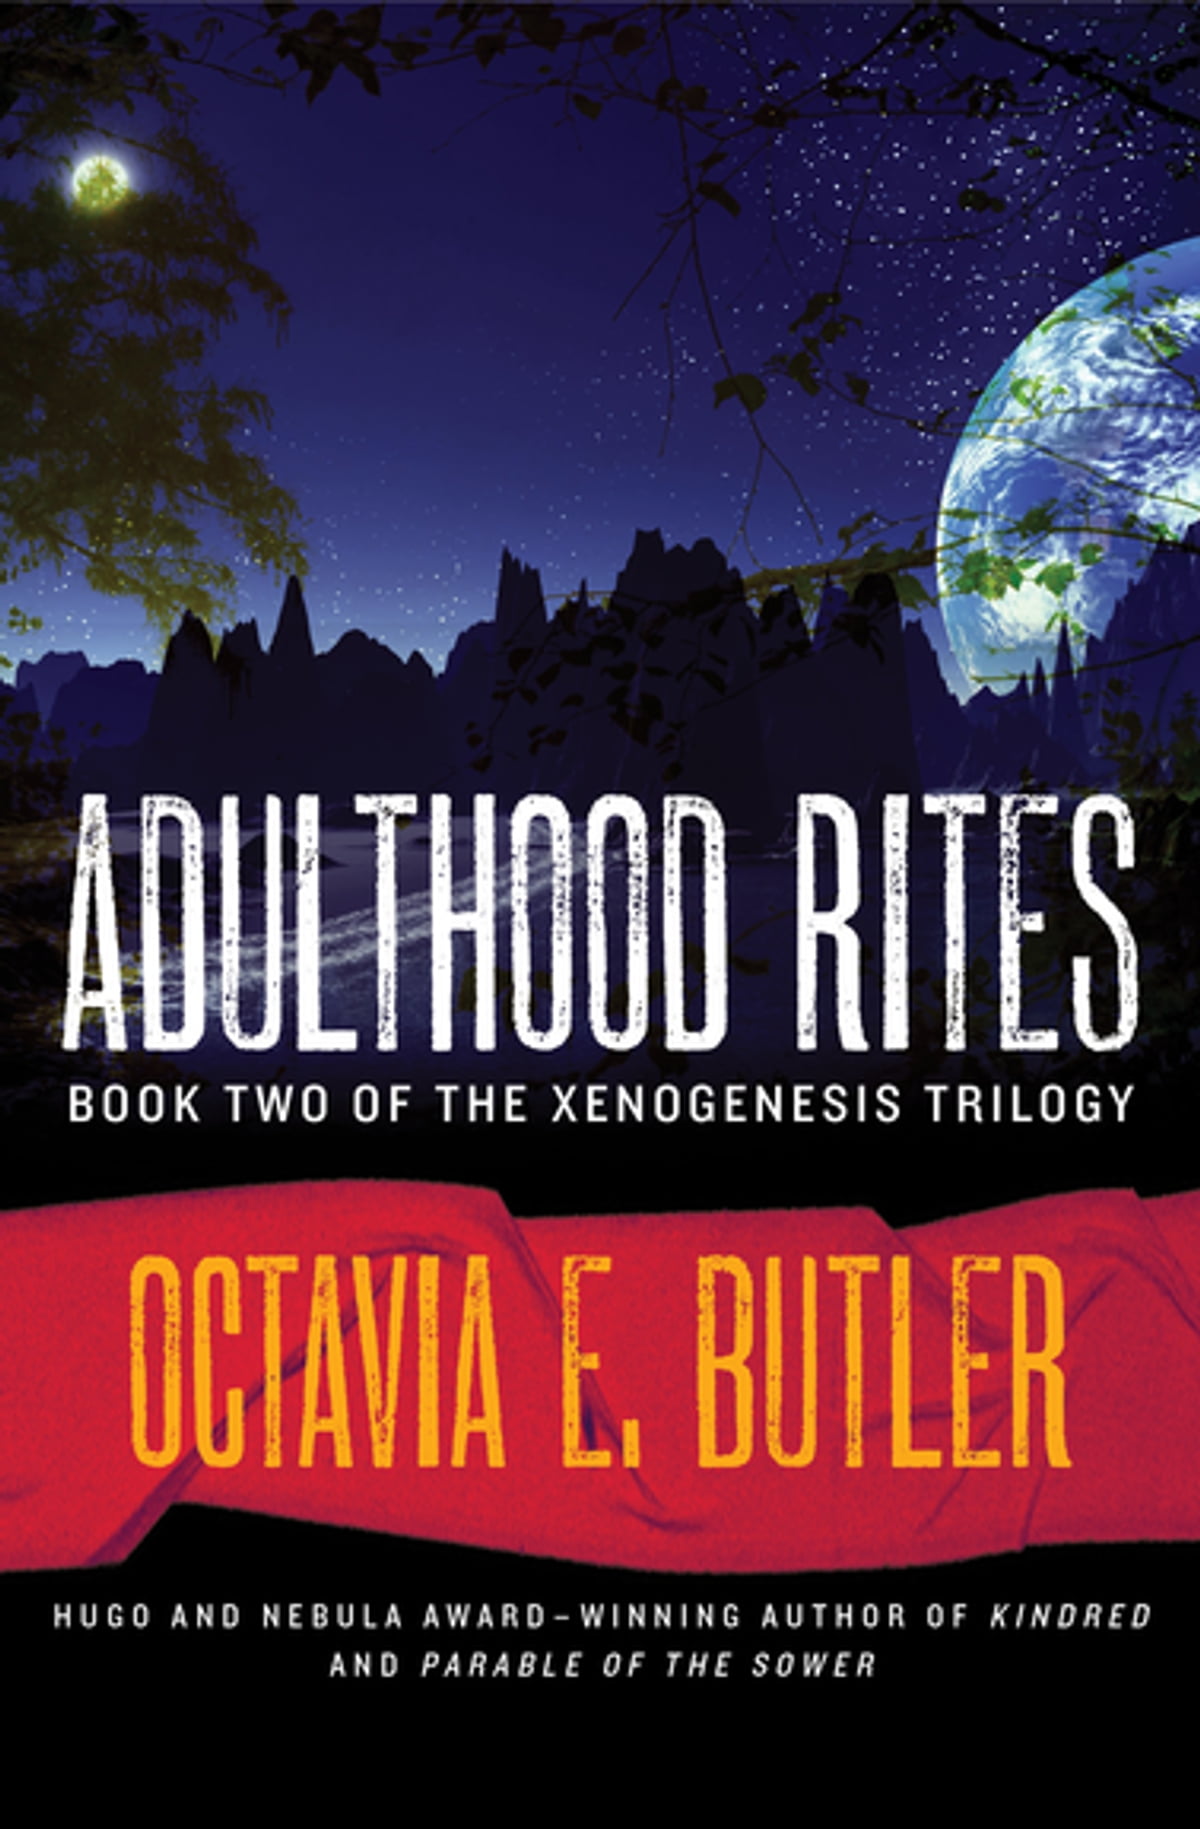 Octavia E. Butler: Adulthood Rites (AudiobookFormat, 2015, Audible Studios)